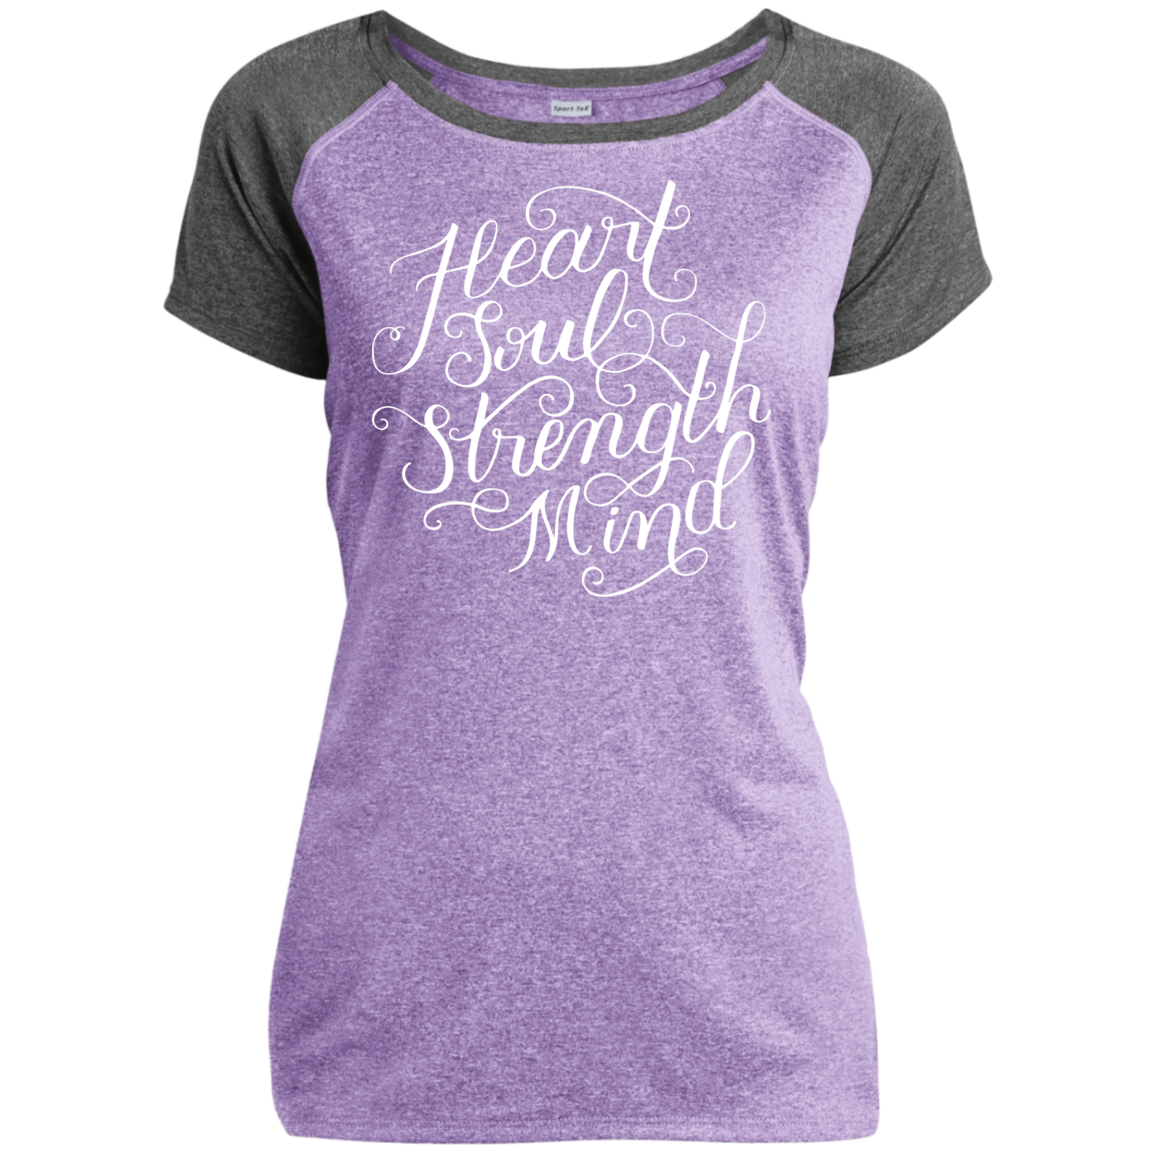 Heart Soul Strength Mind | Ladies’ Heather Performance T-Shirt